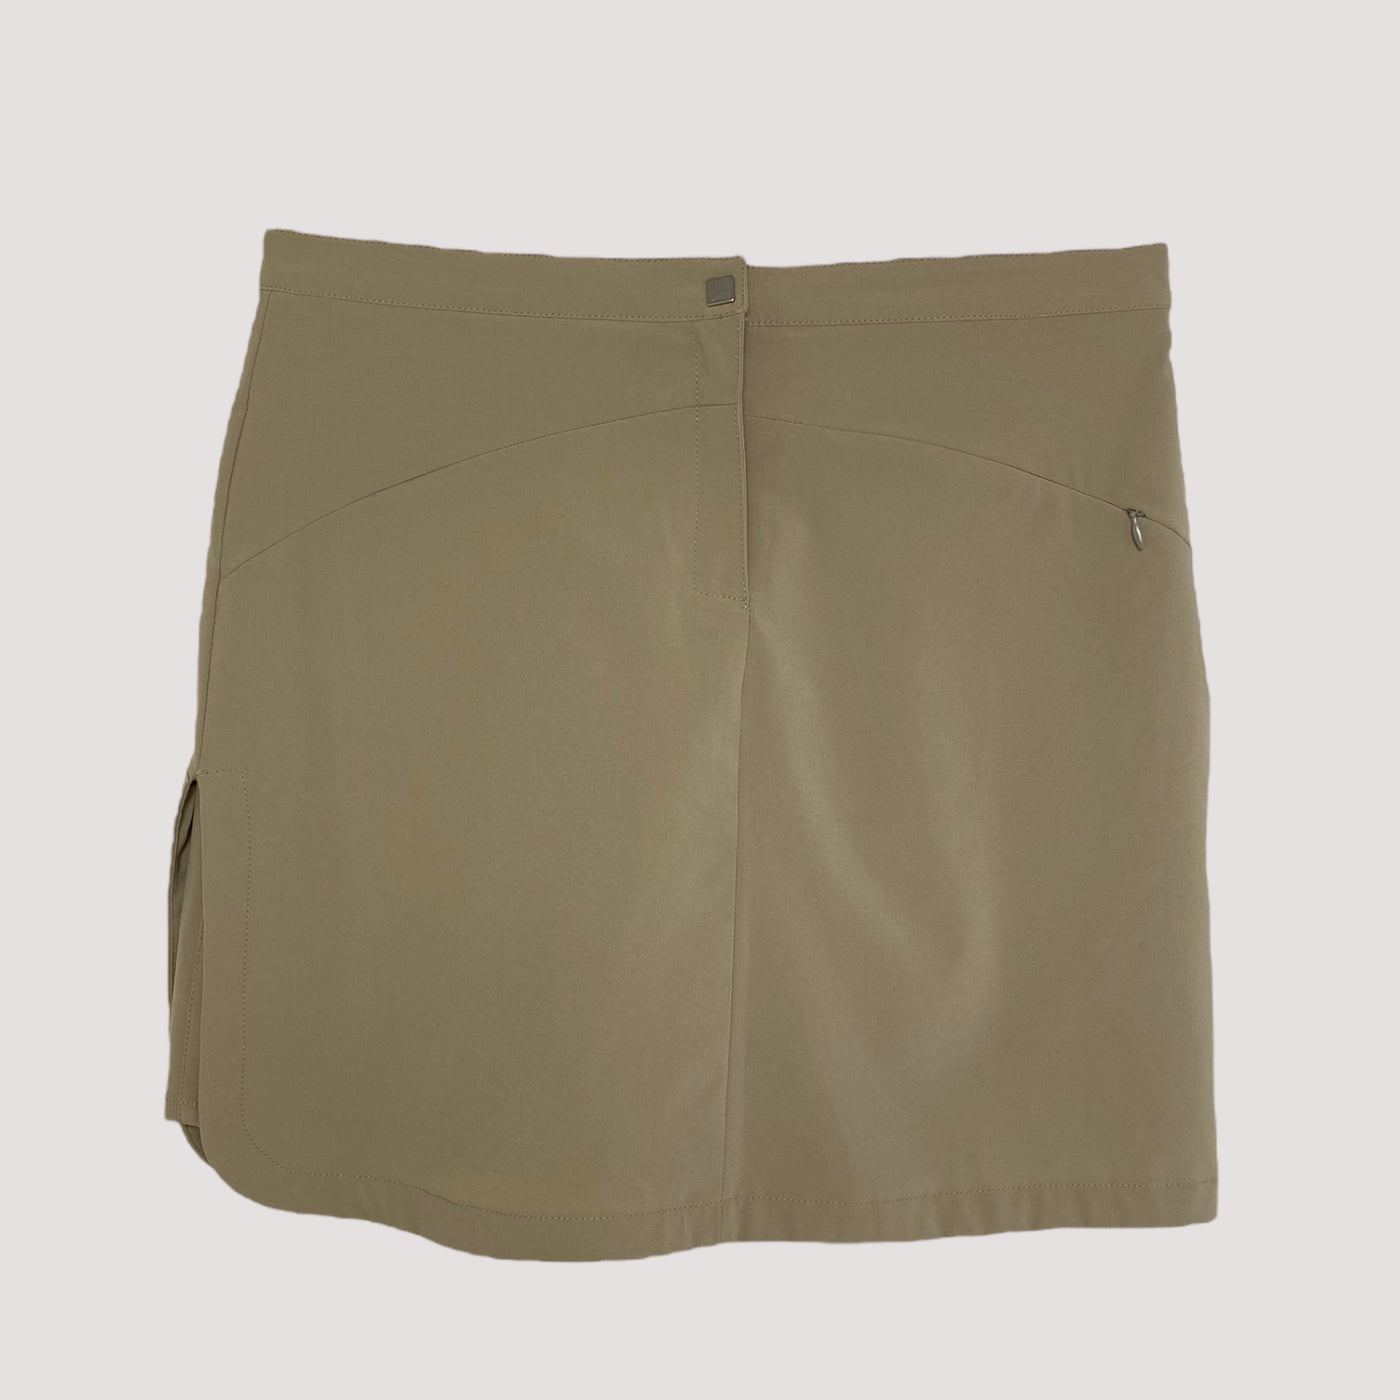 sports skirt/shorts, tan | woman 38